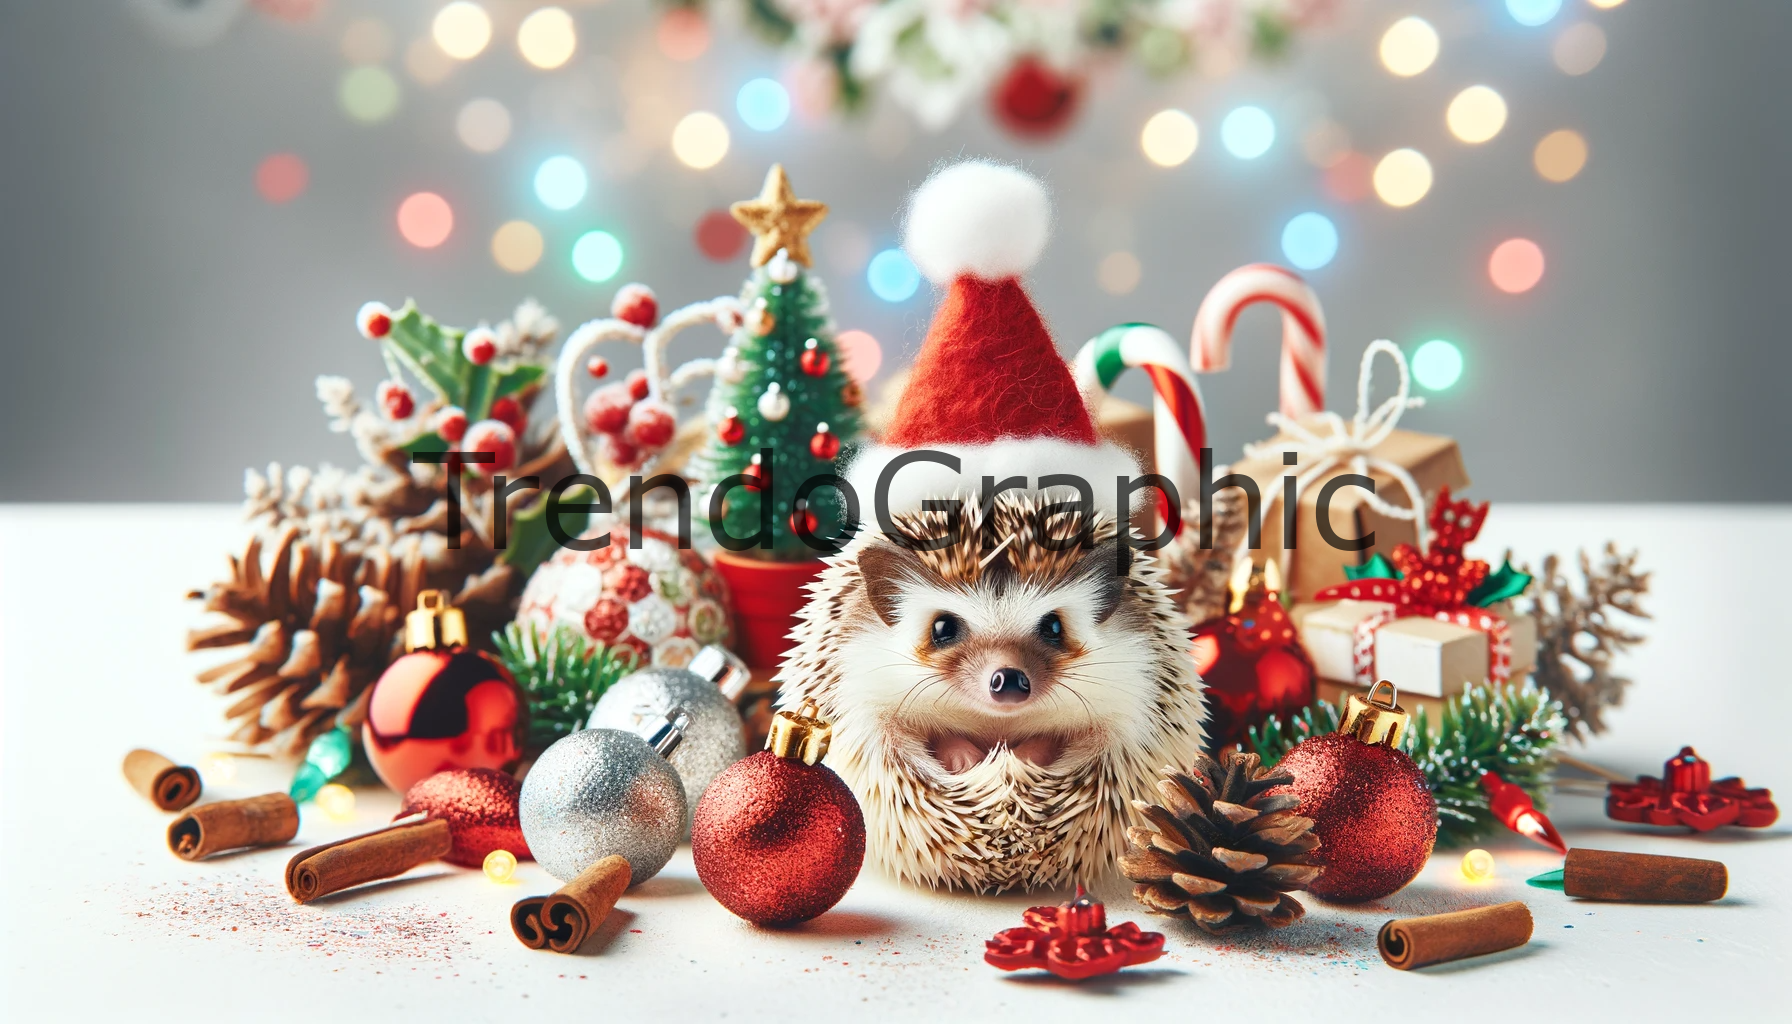 A Cheerful Hedgehog Celebrating Christmas